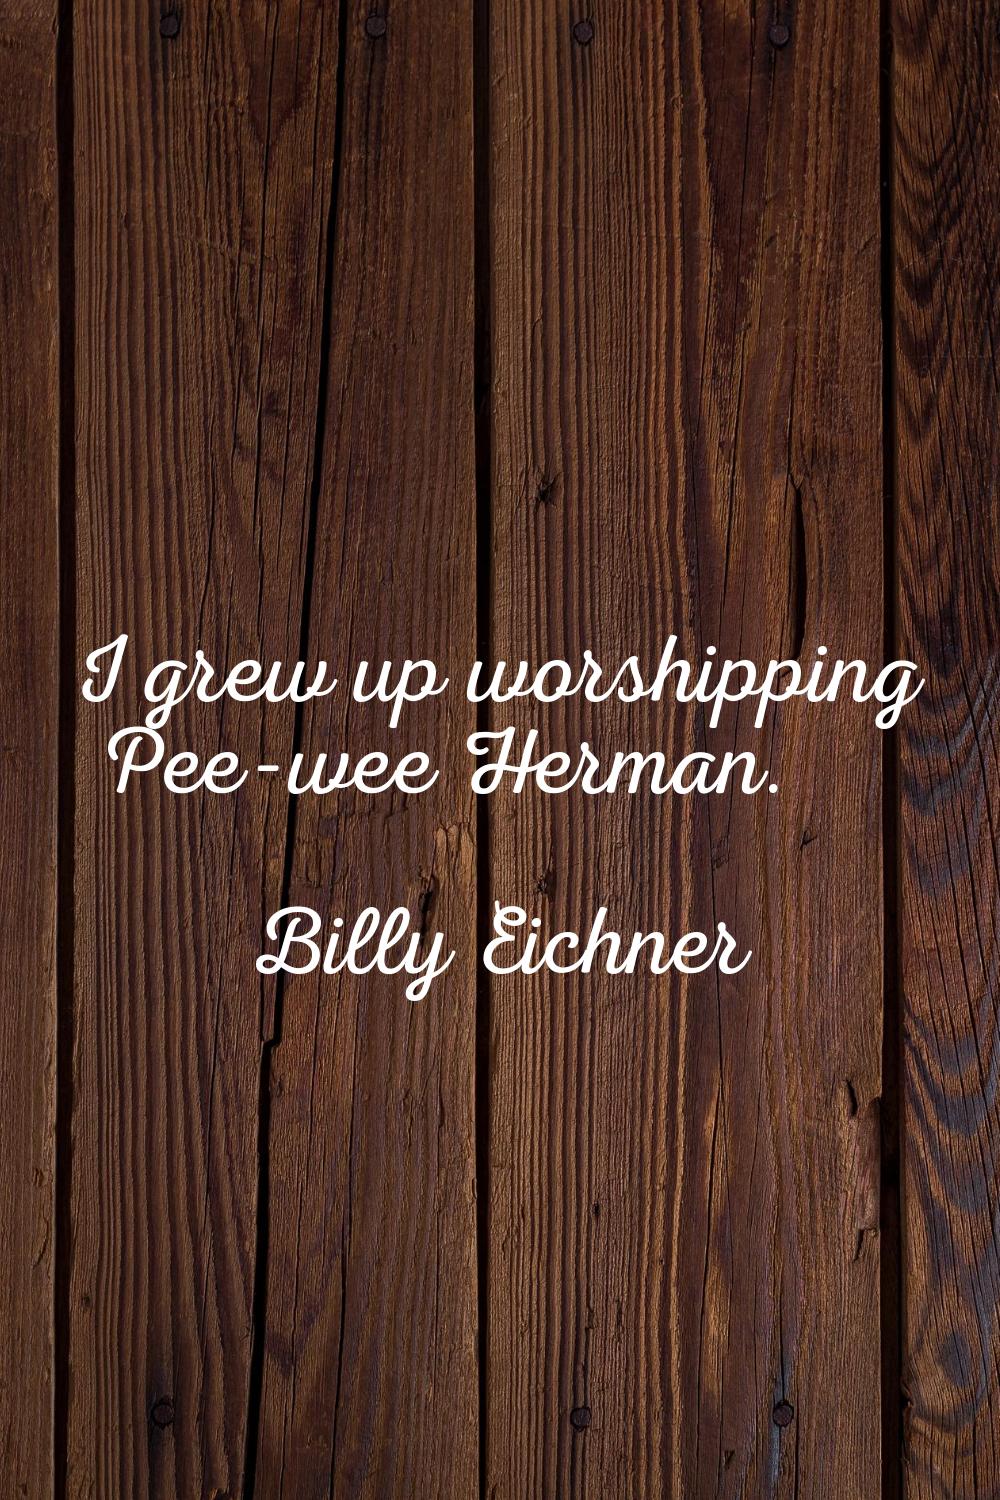 I grew up worshipping Pee-wee Herman.